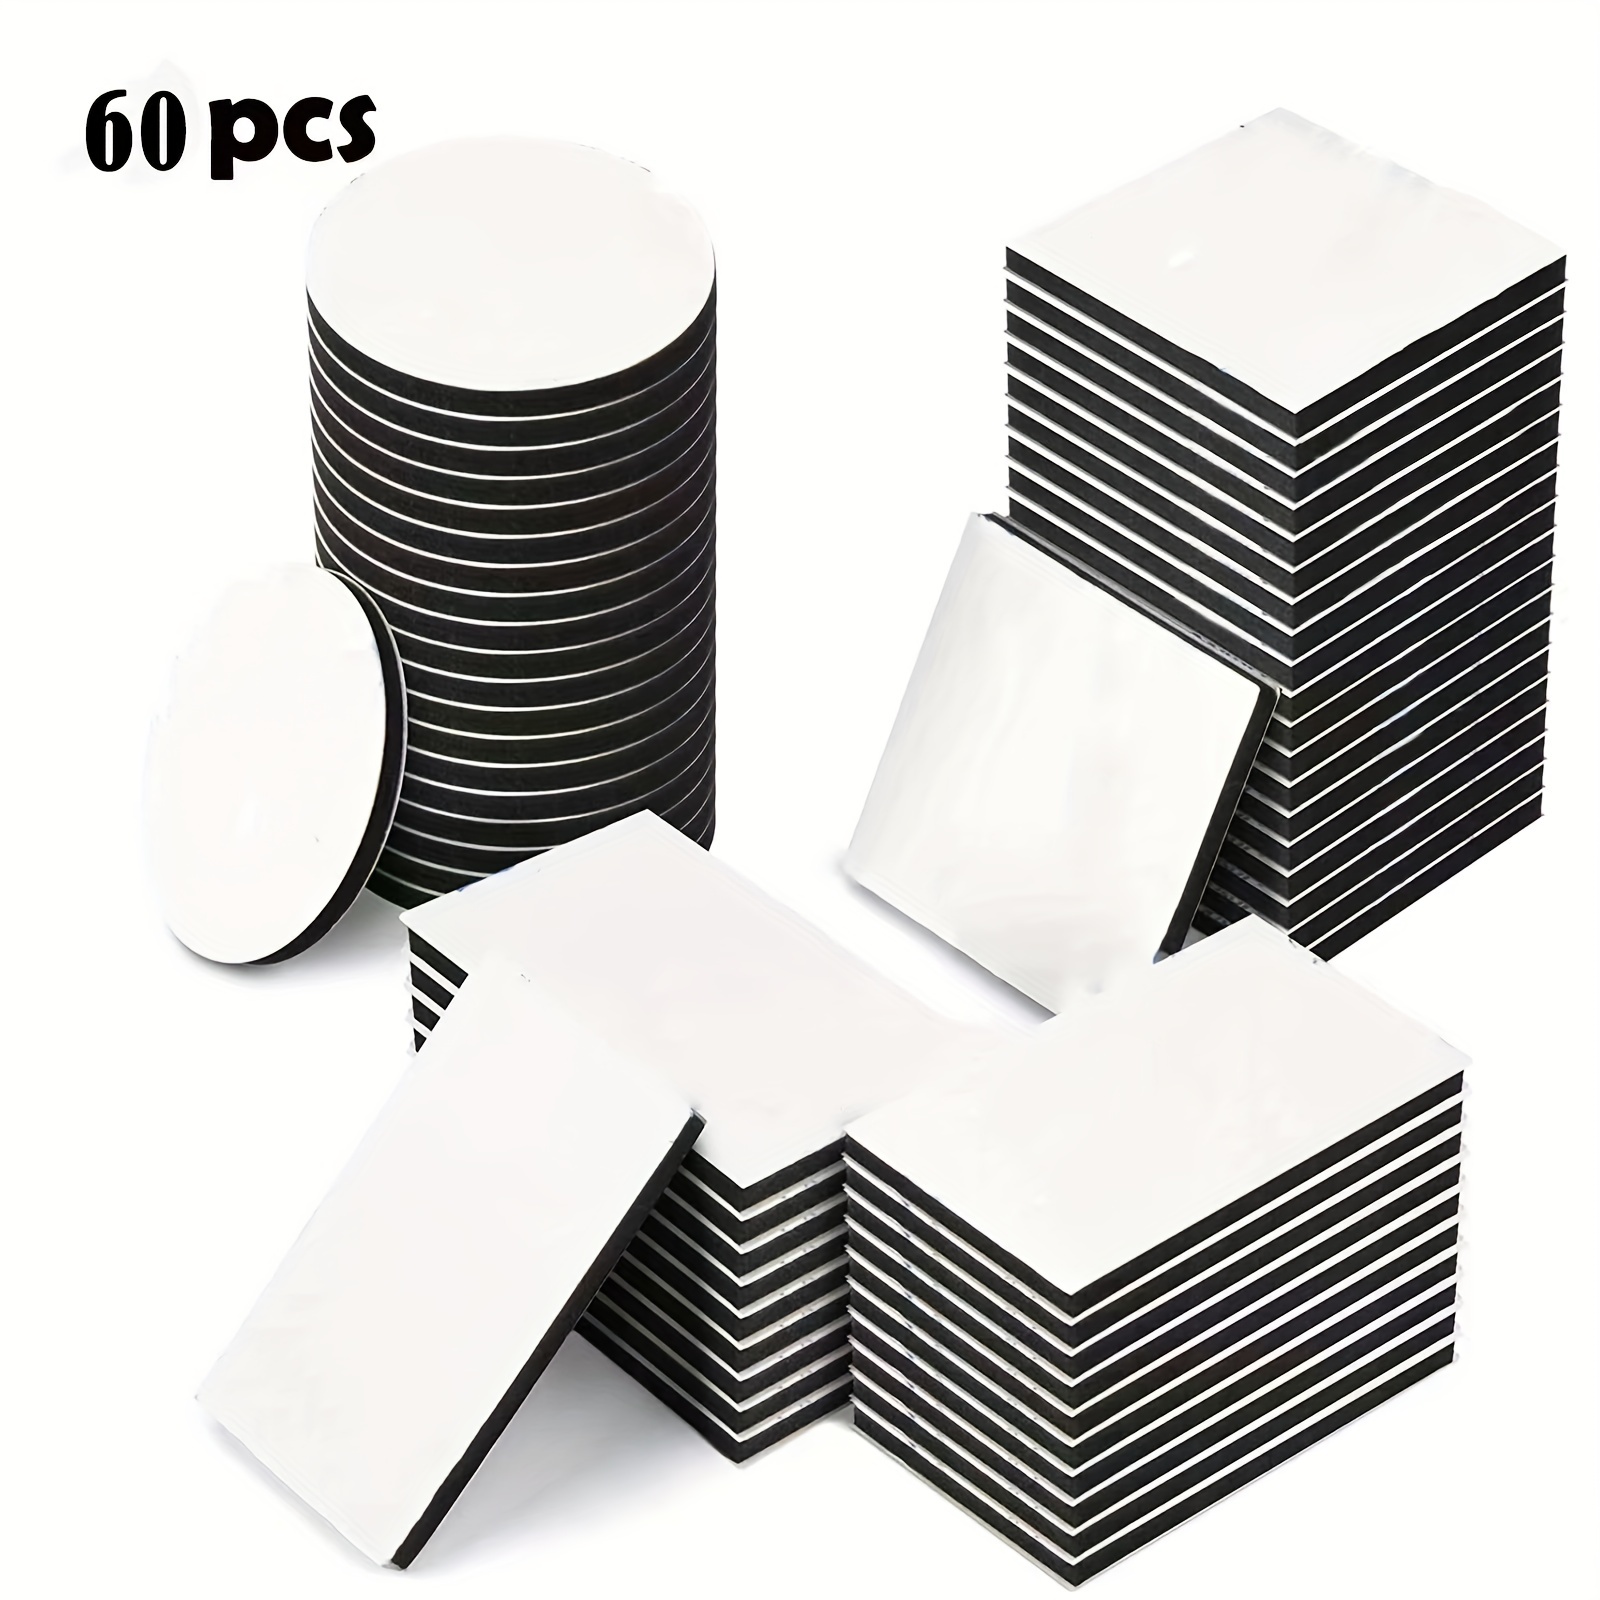 60 Piece Plastic Party Plates White Square Disposable Plates, 30